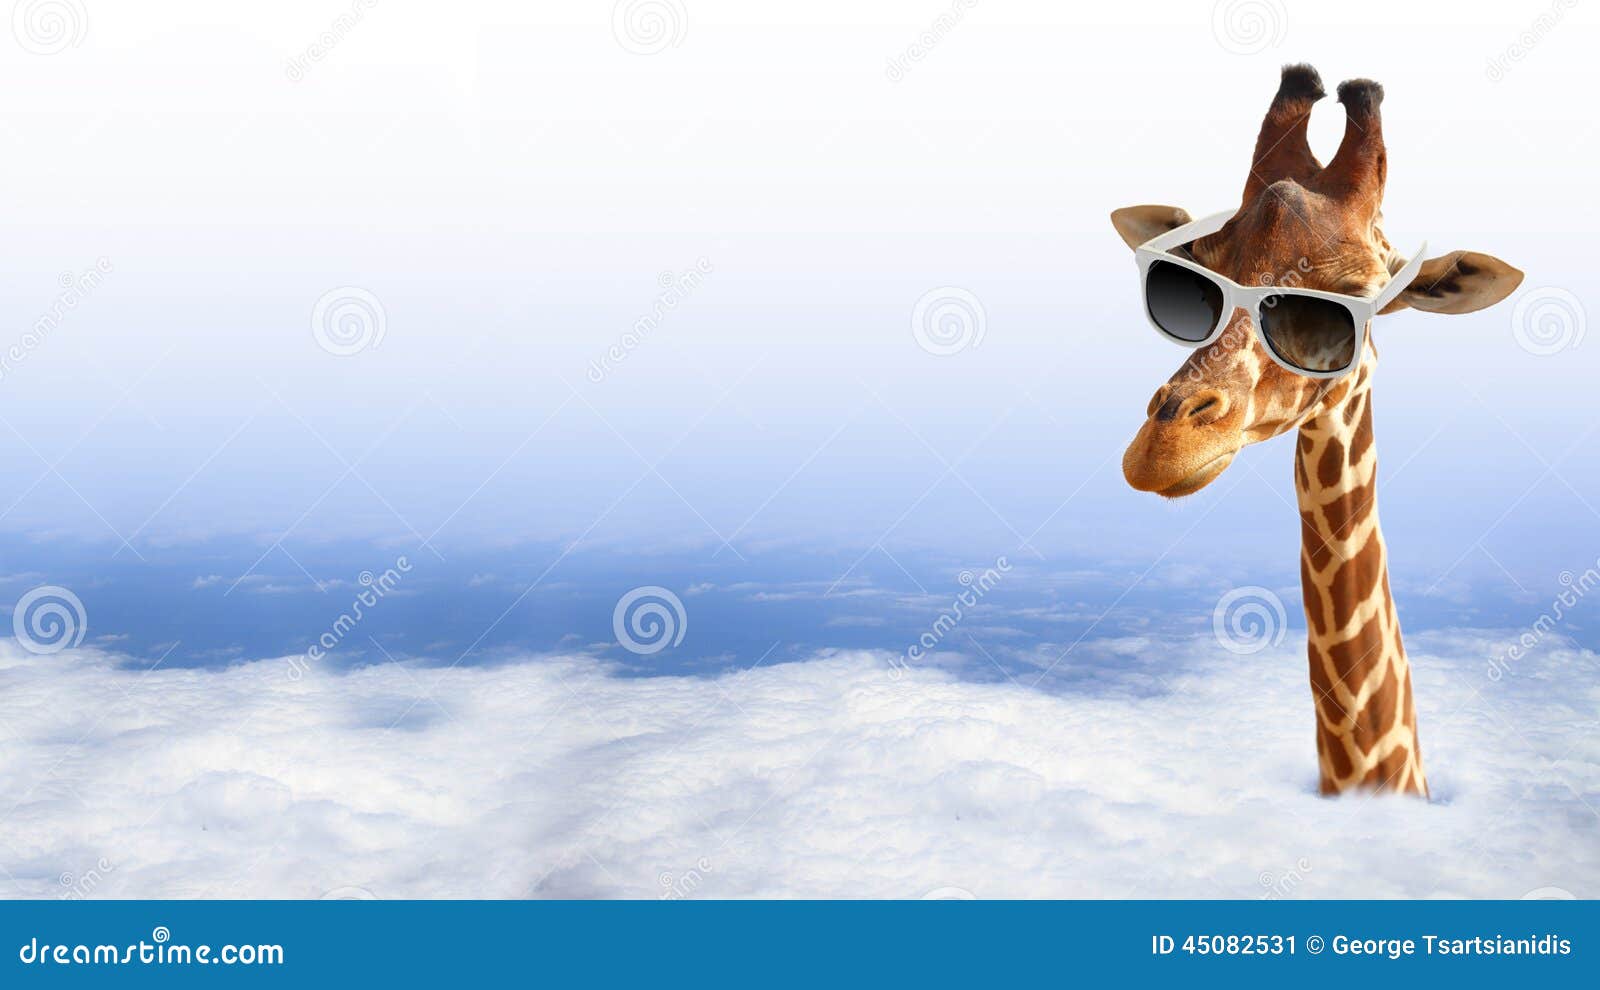 funny giraffe with sunglasses